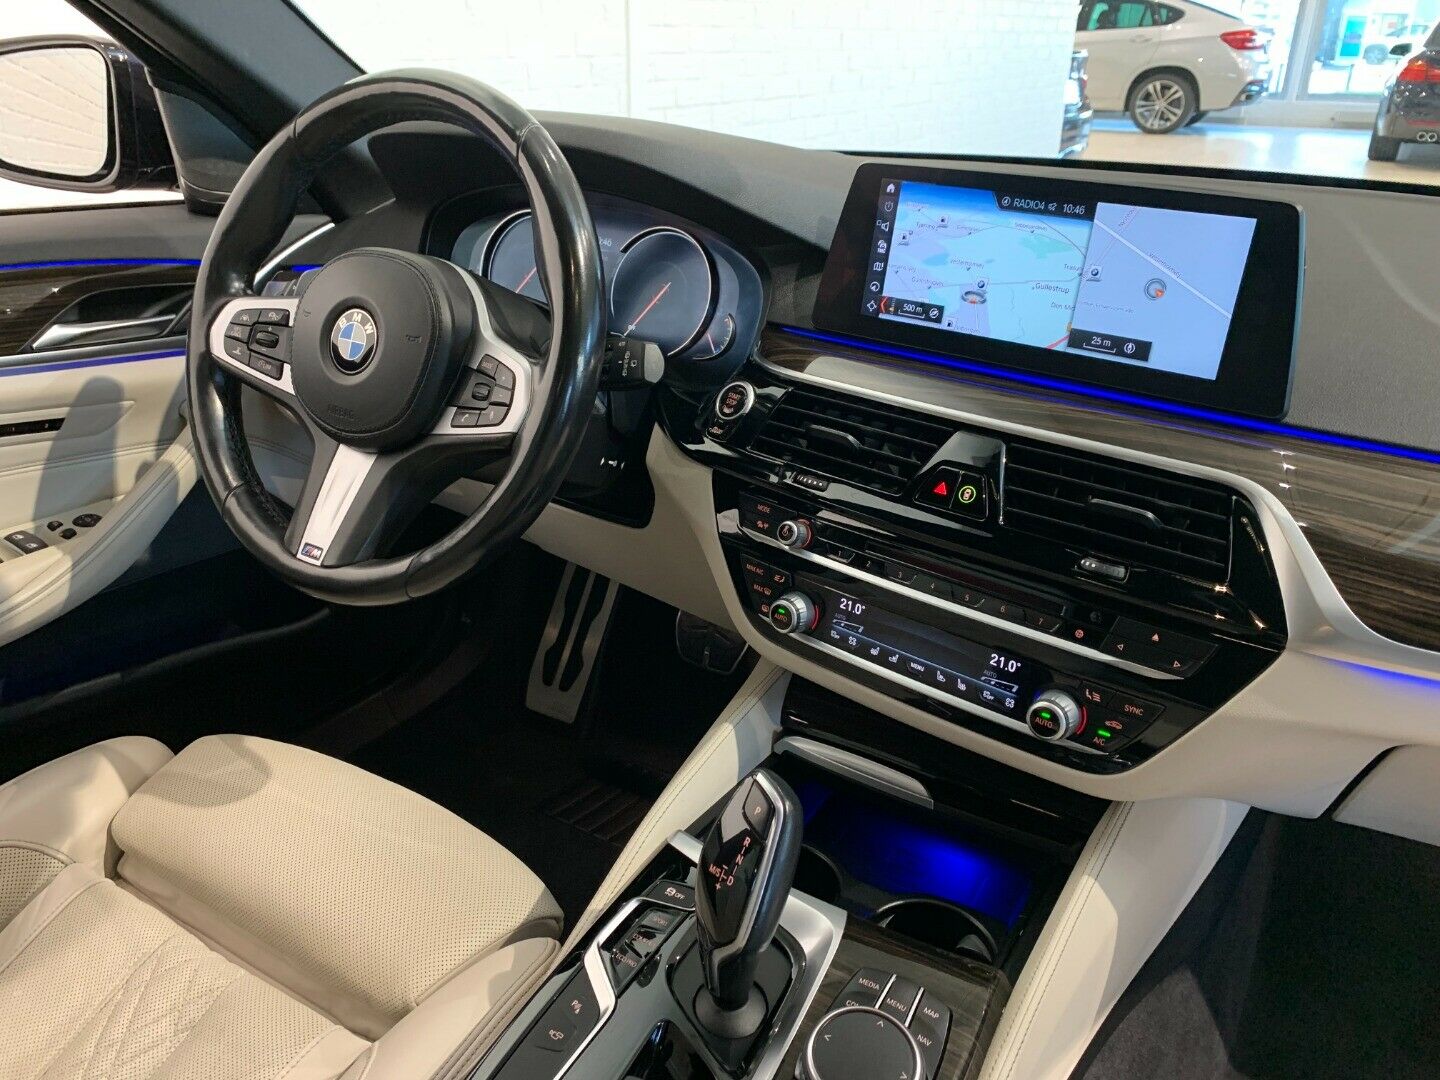 BMW 540d 3,0 Touring xDrive aut. Van,  5-dørs